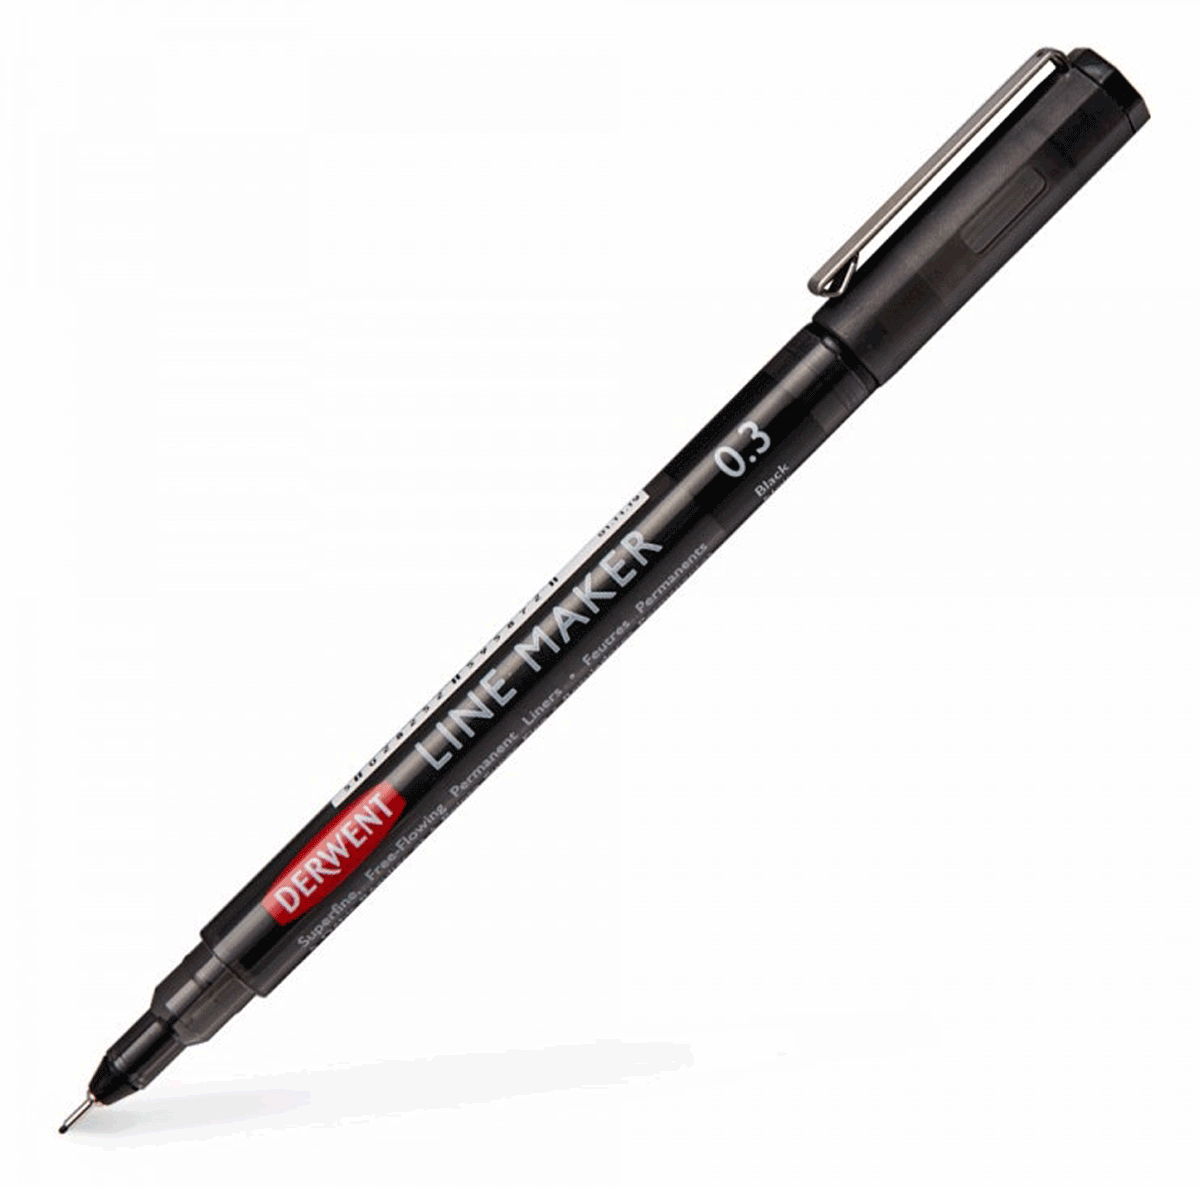 Derwent Graphik Line Marker Pen - Black 0.3